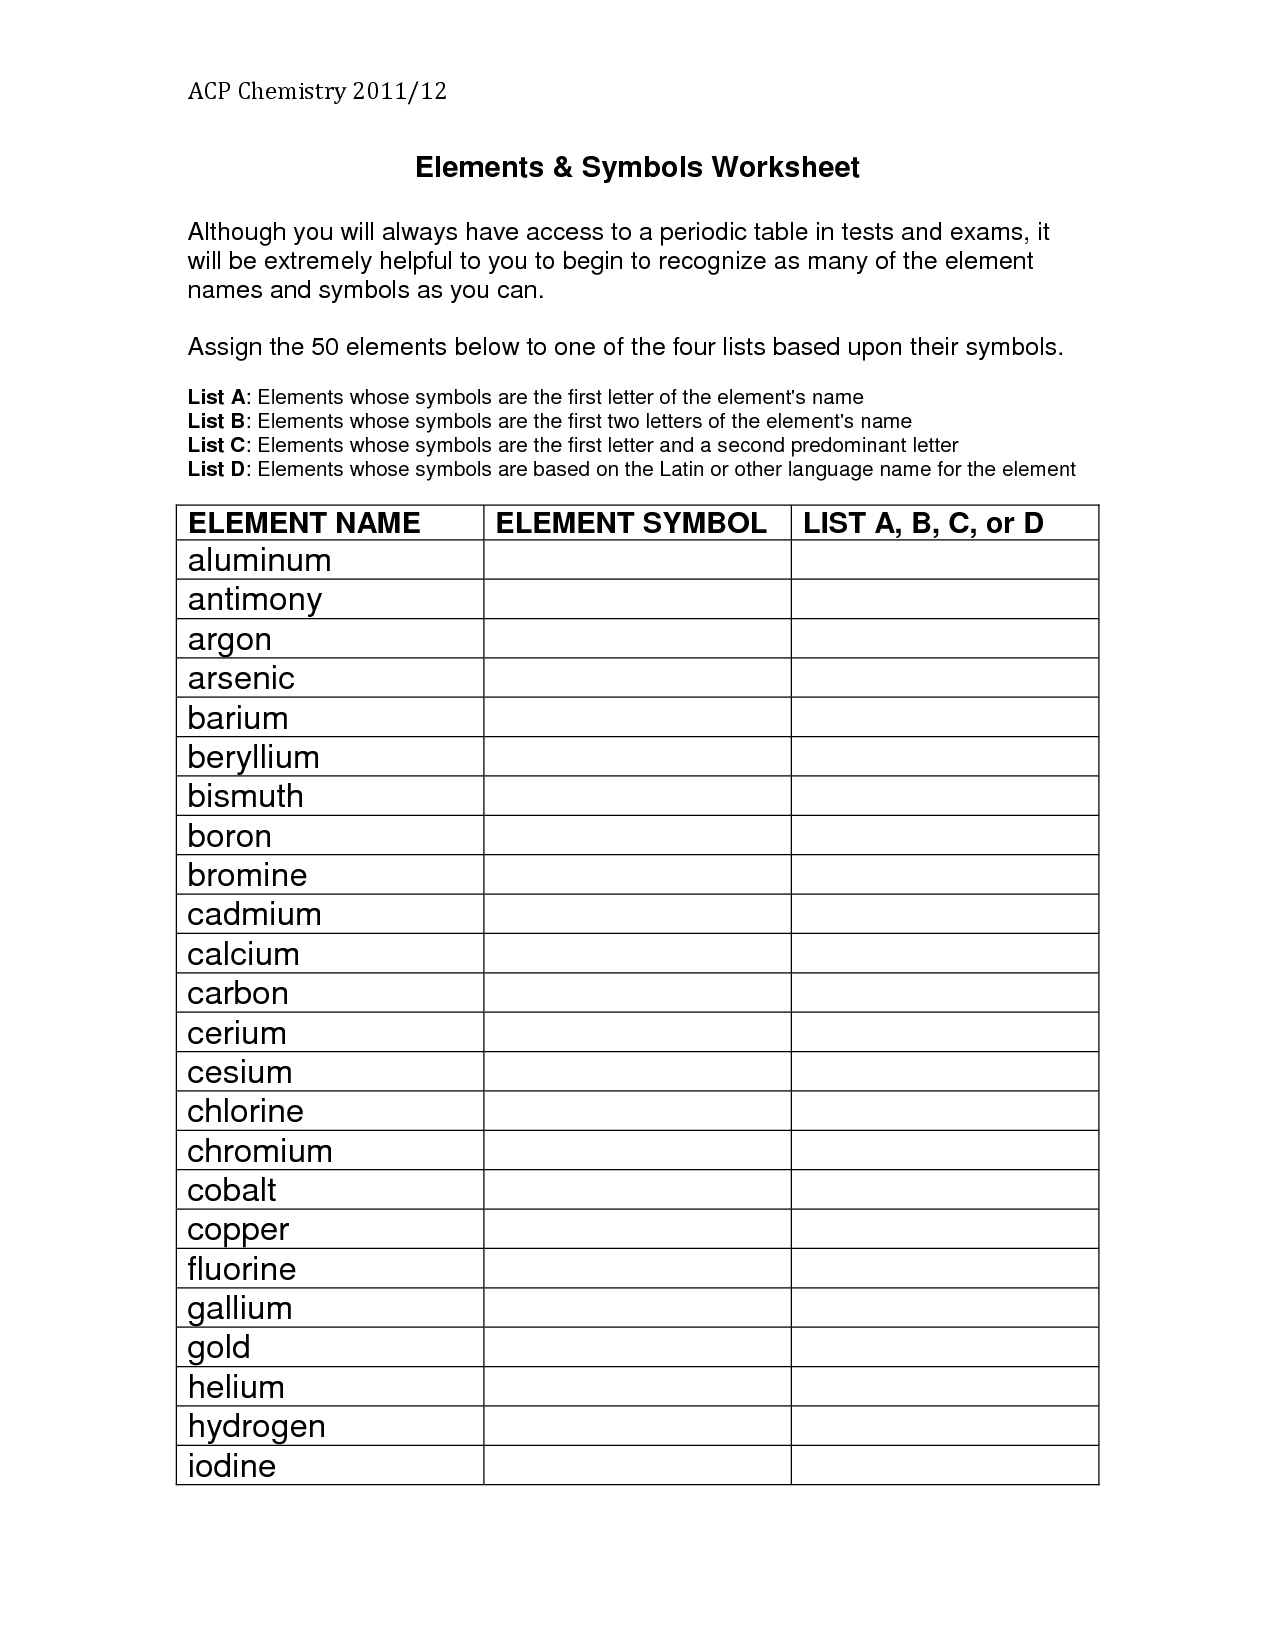 Elements and Symbols Worksheets Image